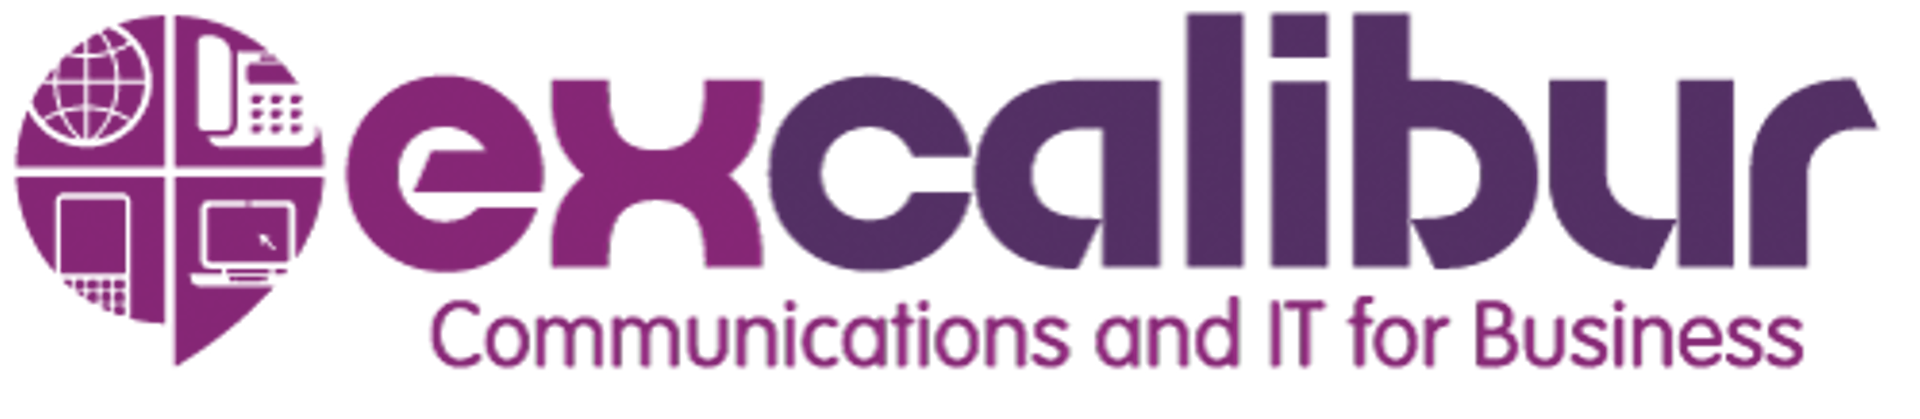 Excalibur Communications logo